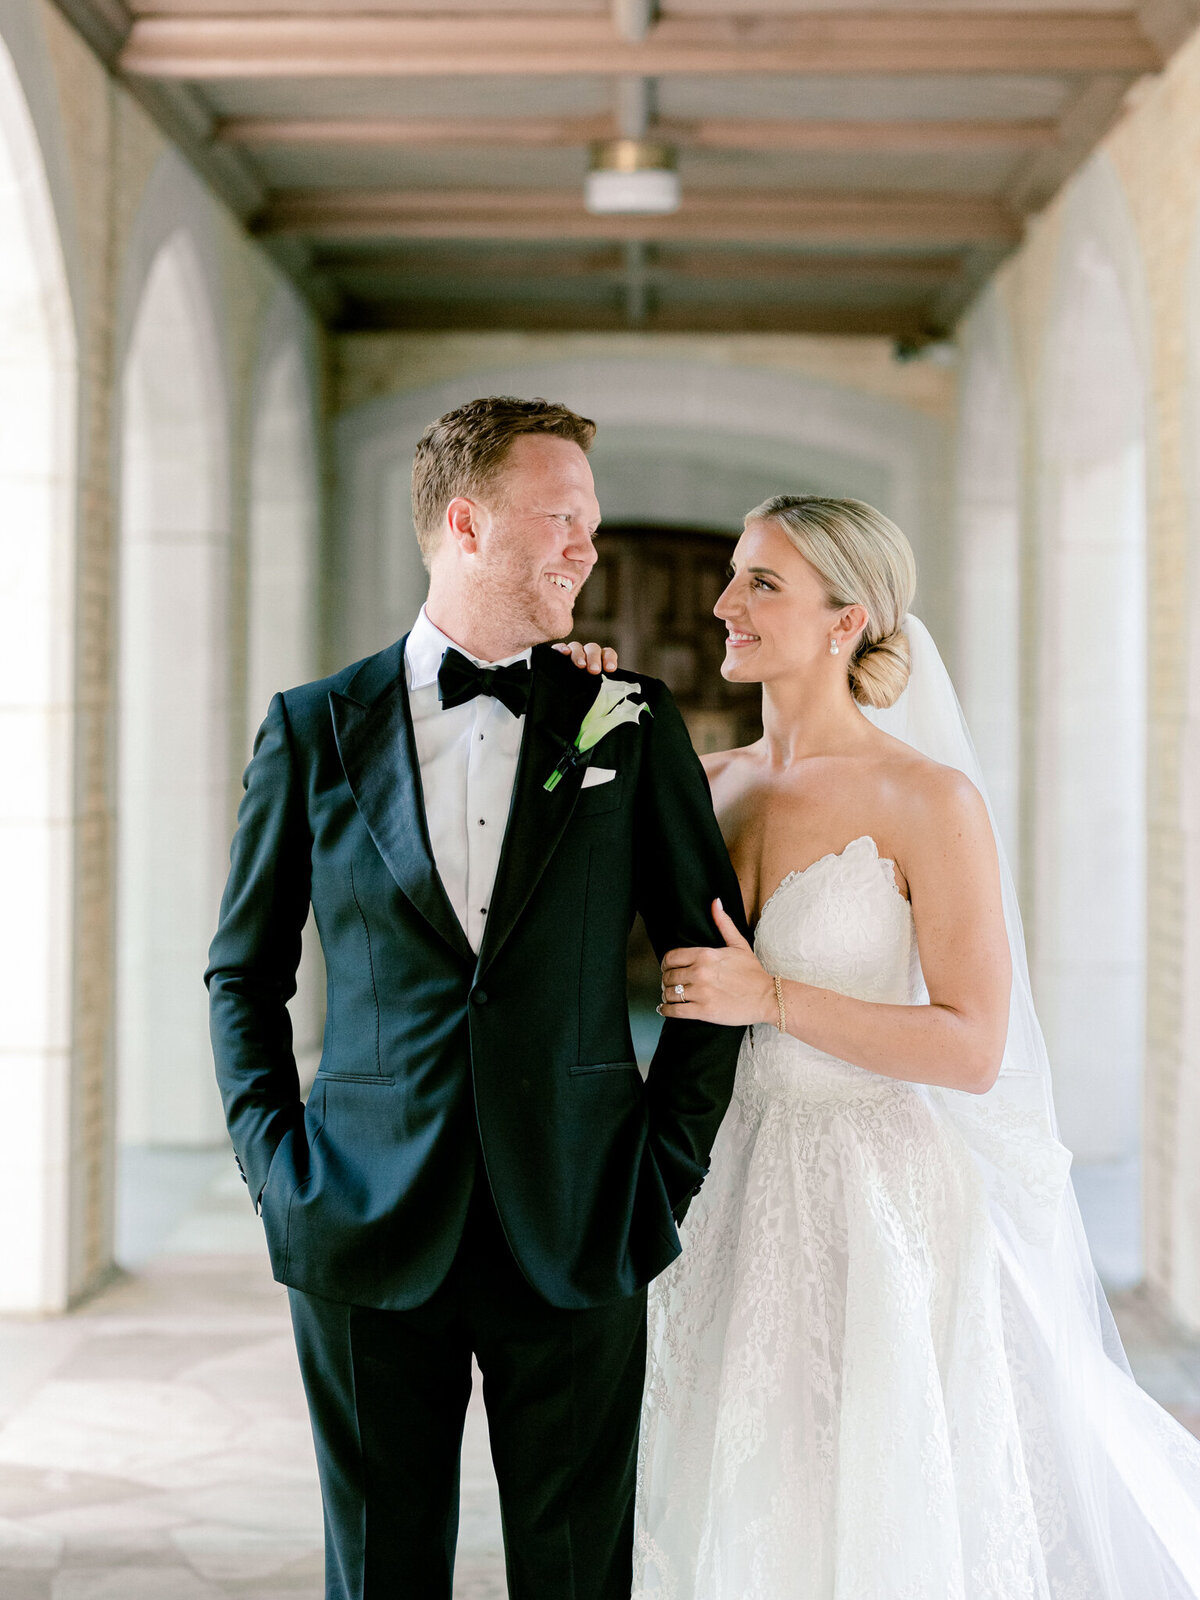 Katelyn & Kyle's Wedding at the Adolphus Hotel | Dallas Wedding Photographer | Sami Kathryn Photography-7